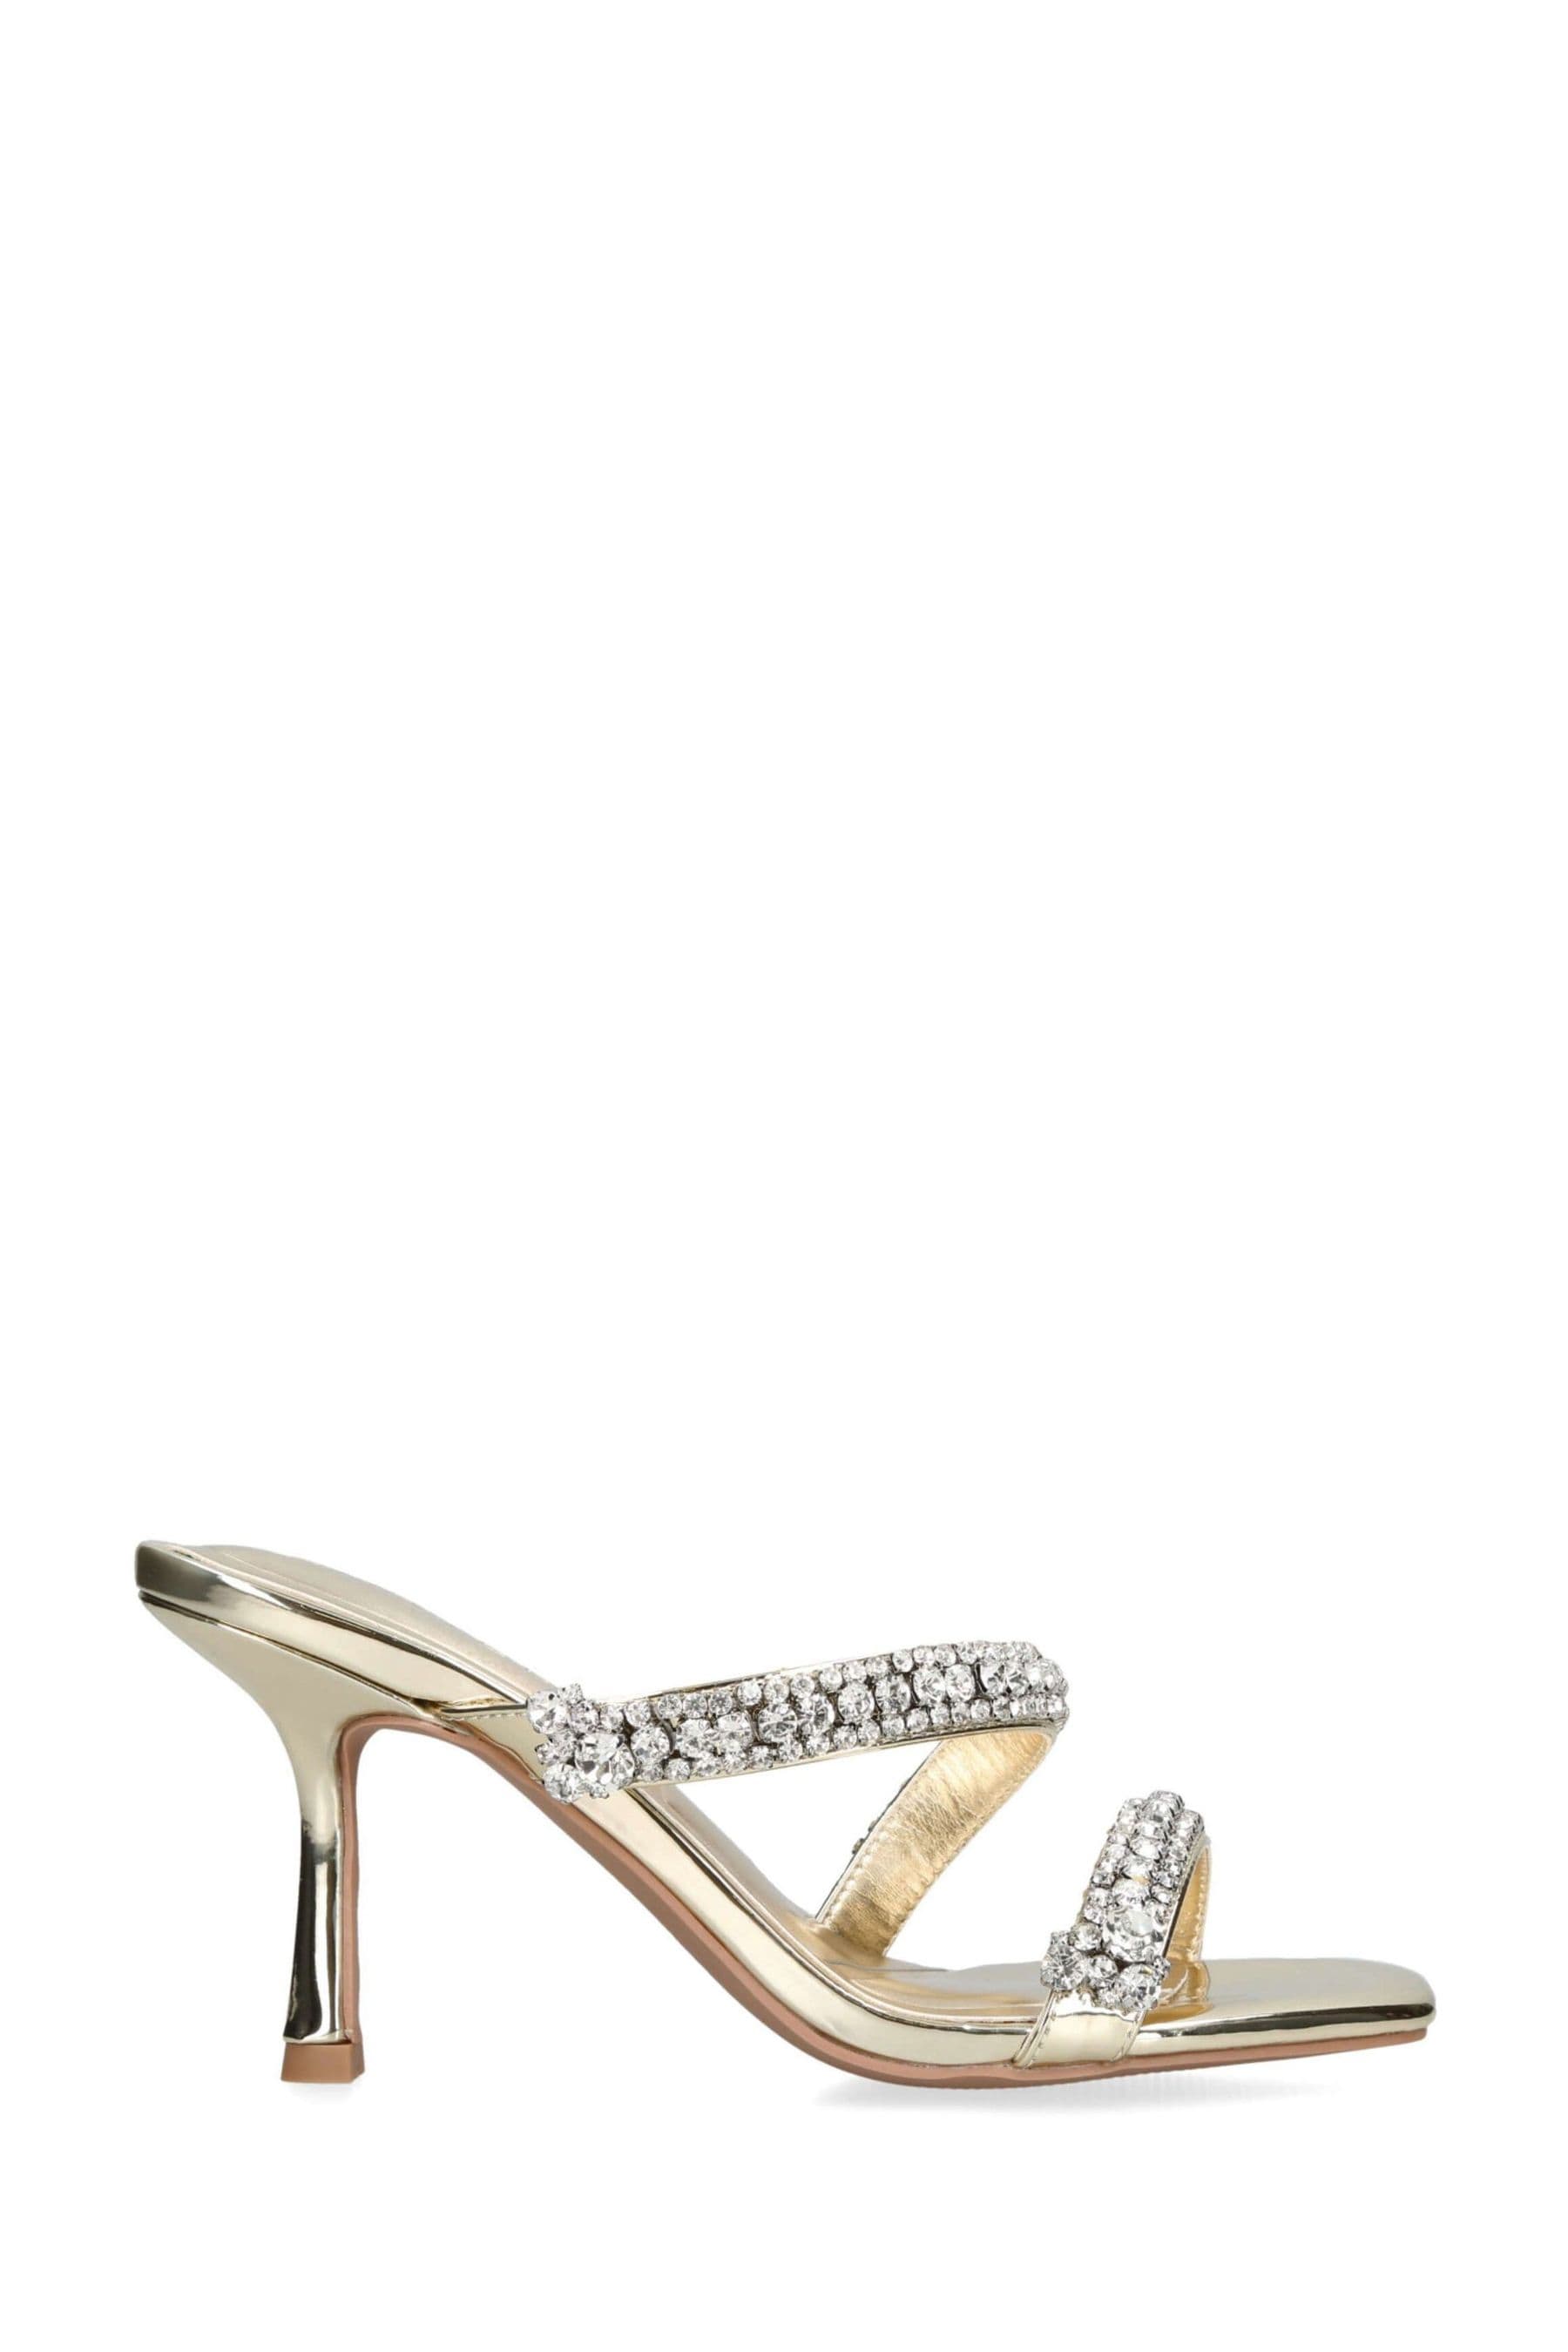 Buy Carvela Gold Symmetry Crystal Mule Sandals from the Next UK online shop